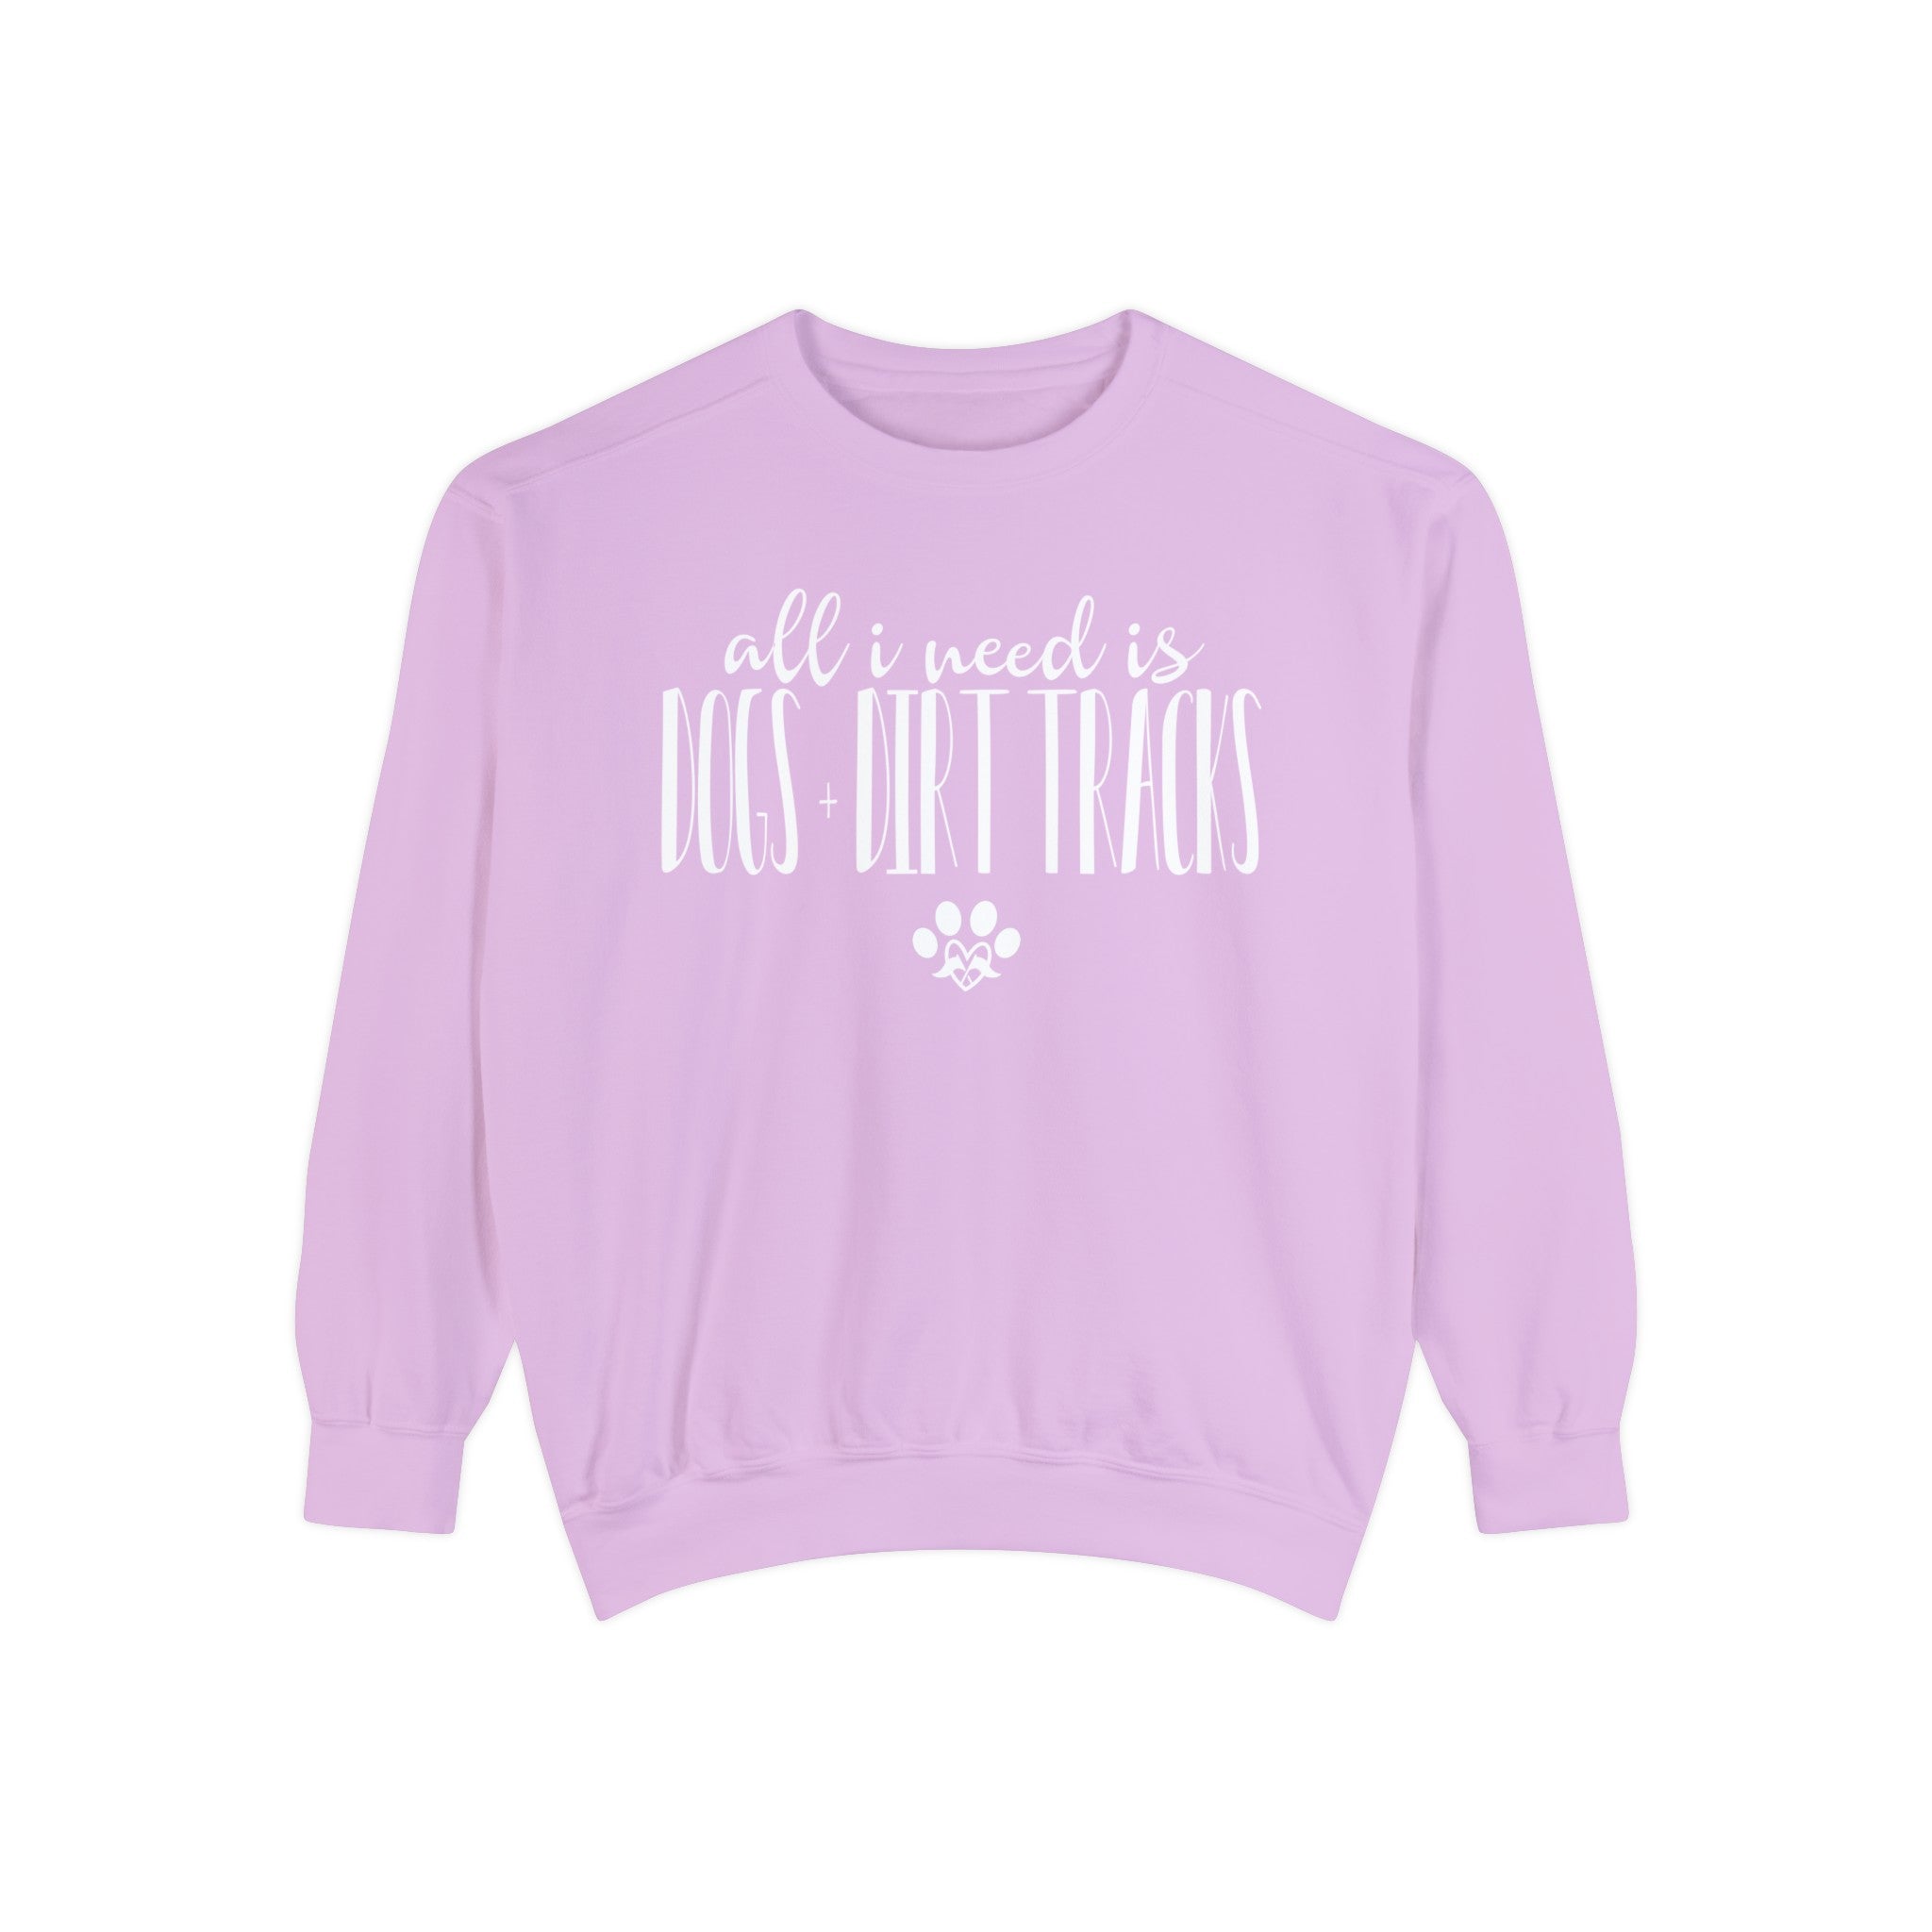 All I Need is Dogs + Dirt Tracks Unisex Garment-Dyed Sweatshirt